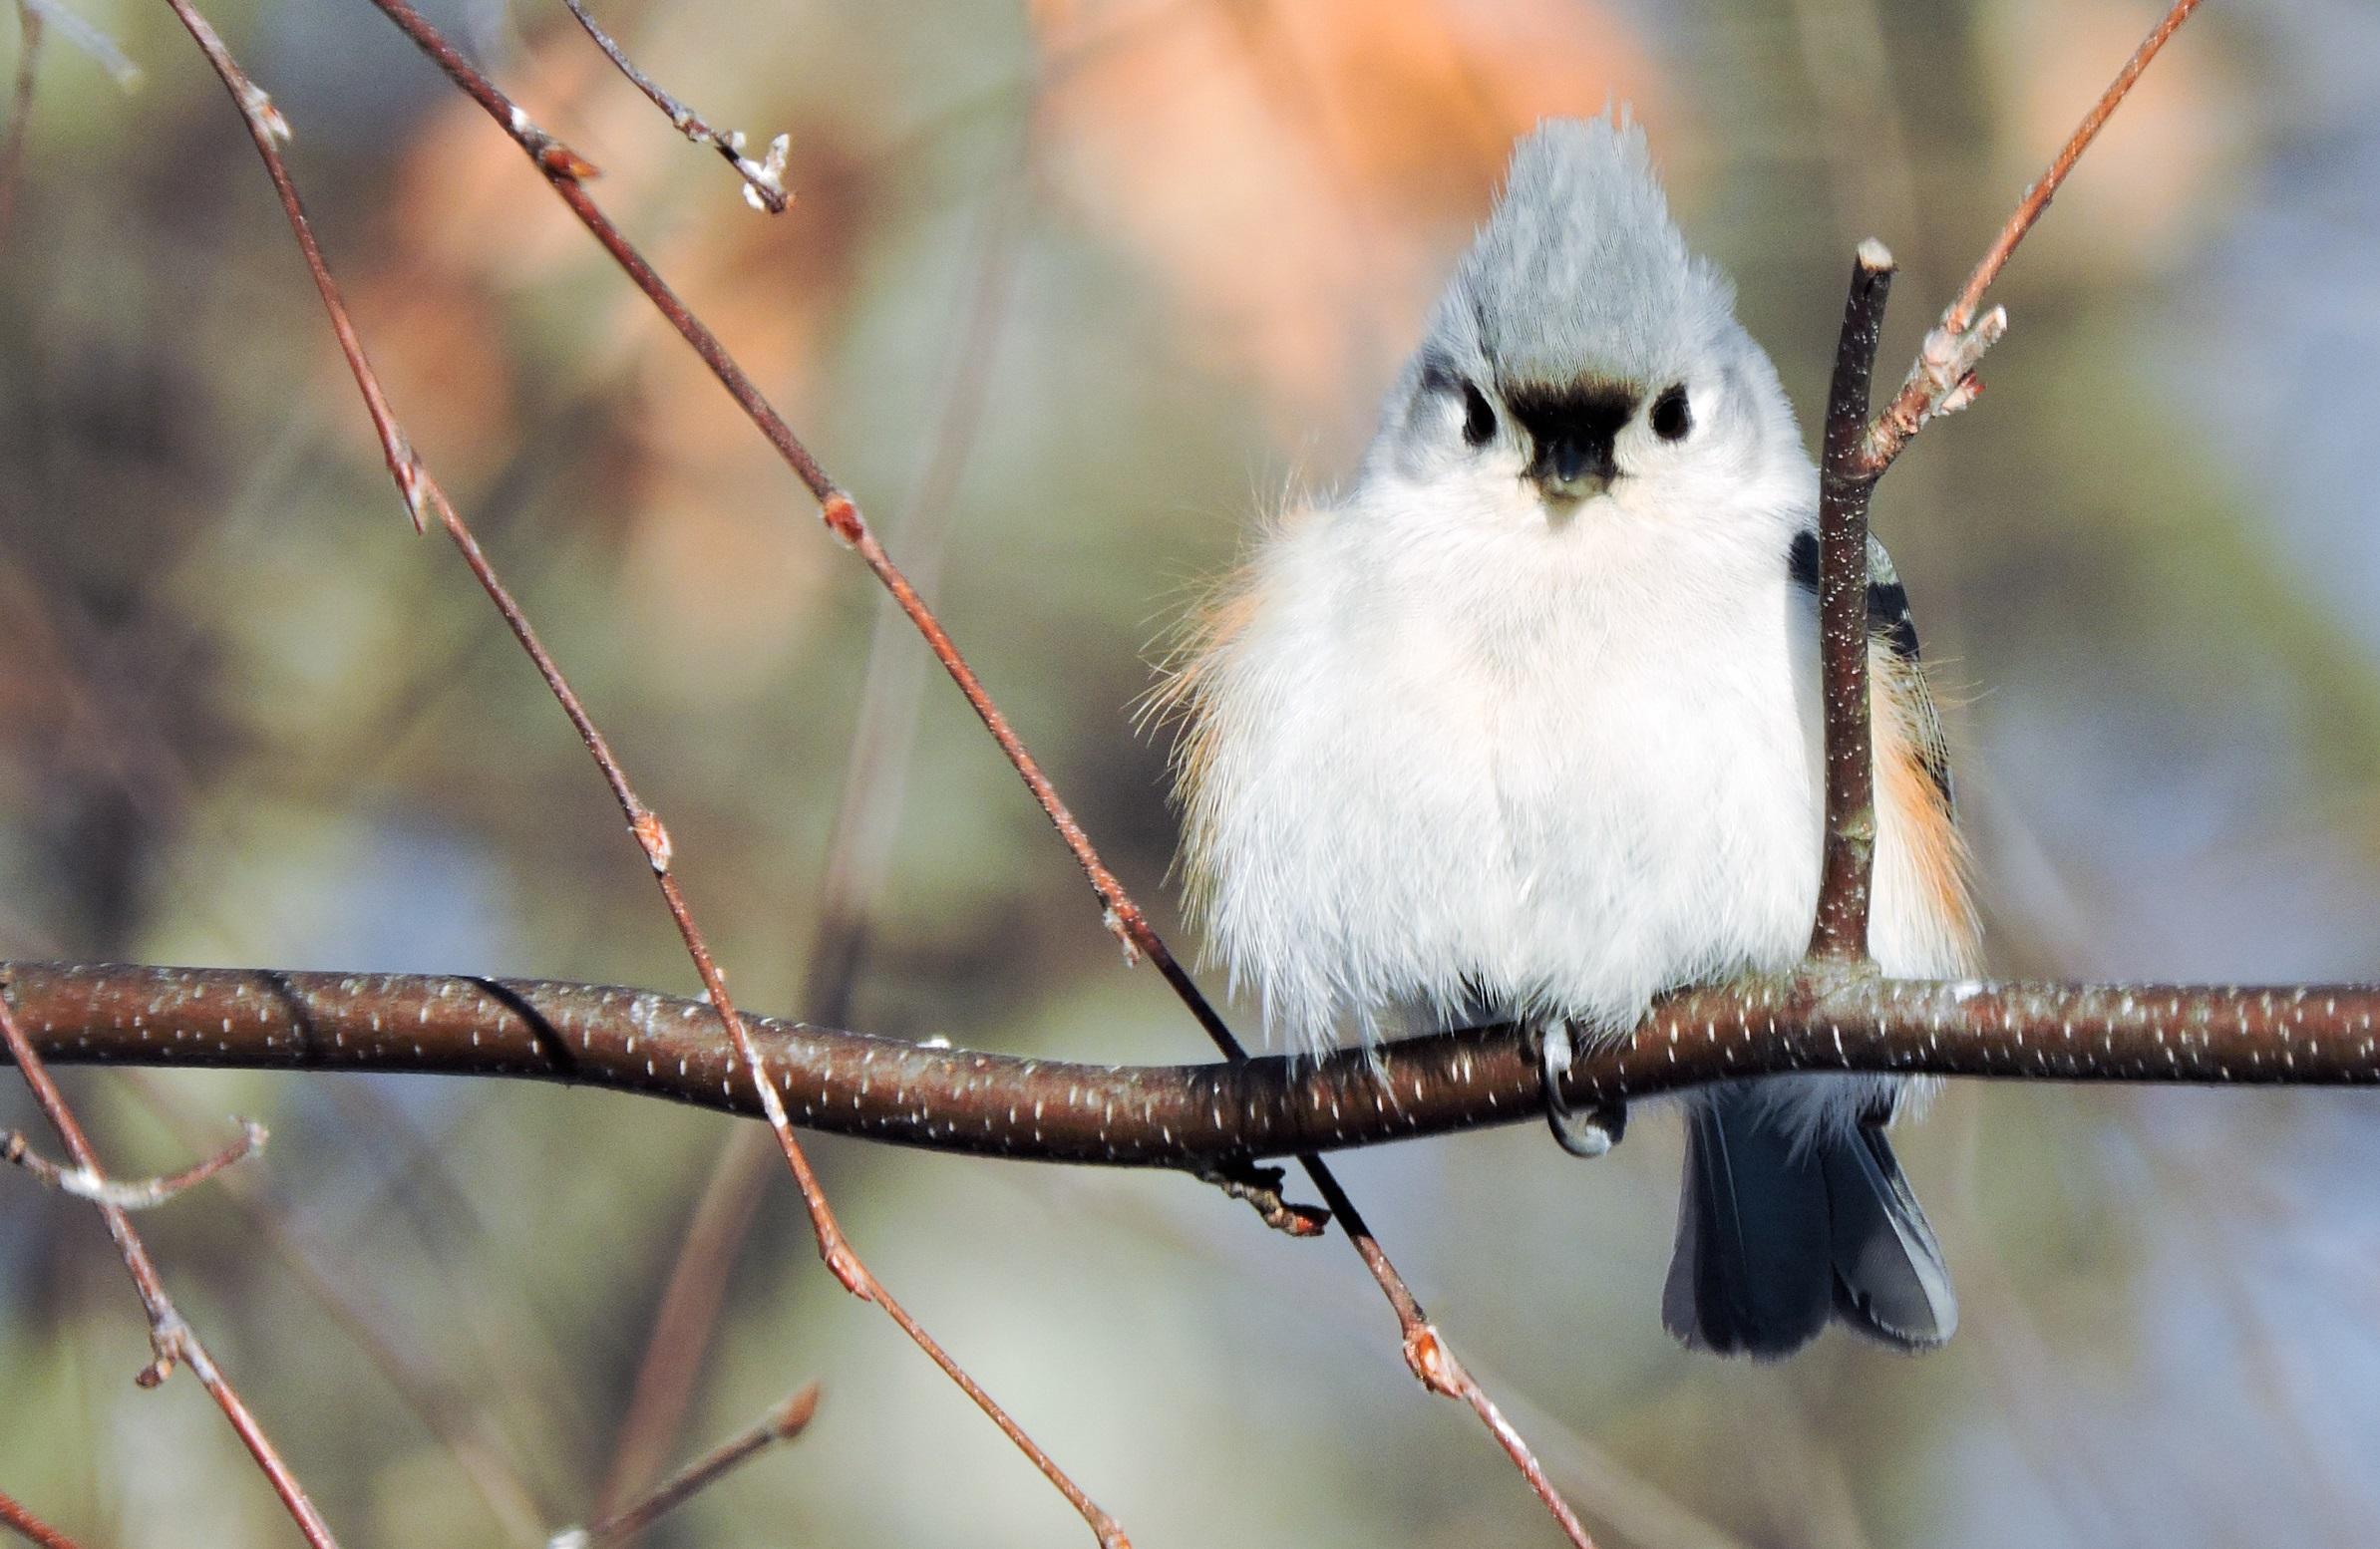 Feeding winter birds in New York: A Joyful Activity